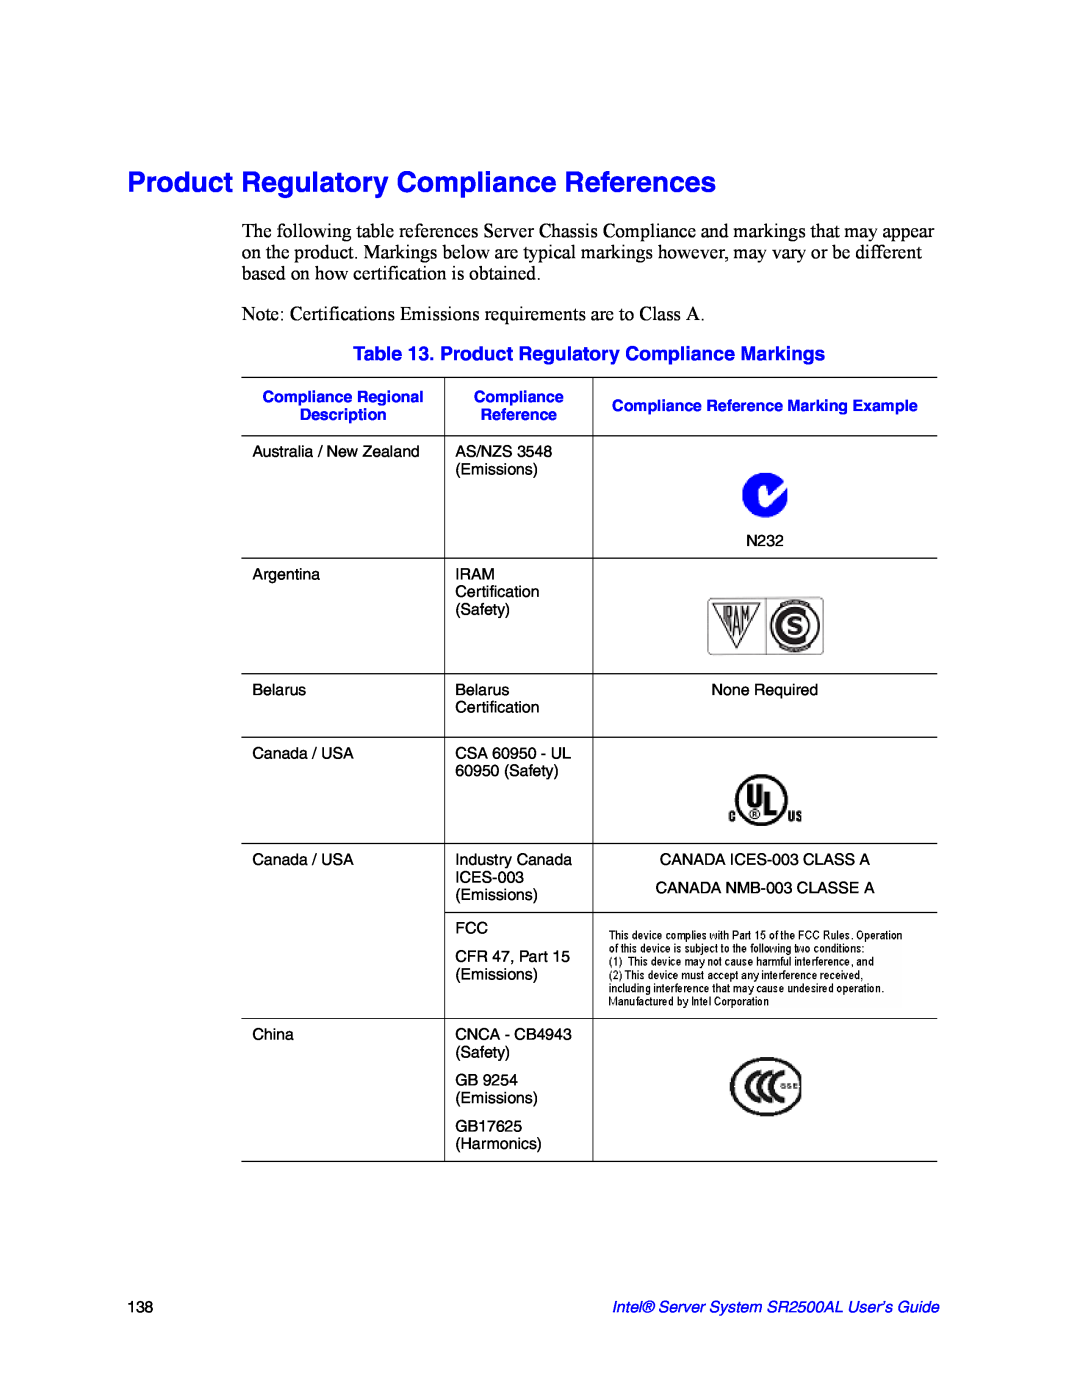 Intel SR2500AL manual Product Regulatory Compliance References, Product Regulatory Compliance Markings 